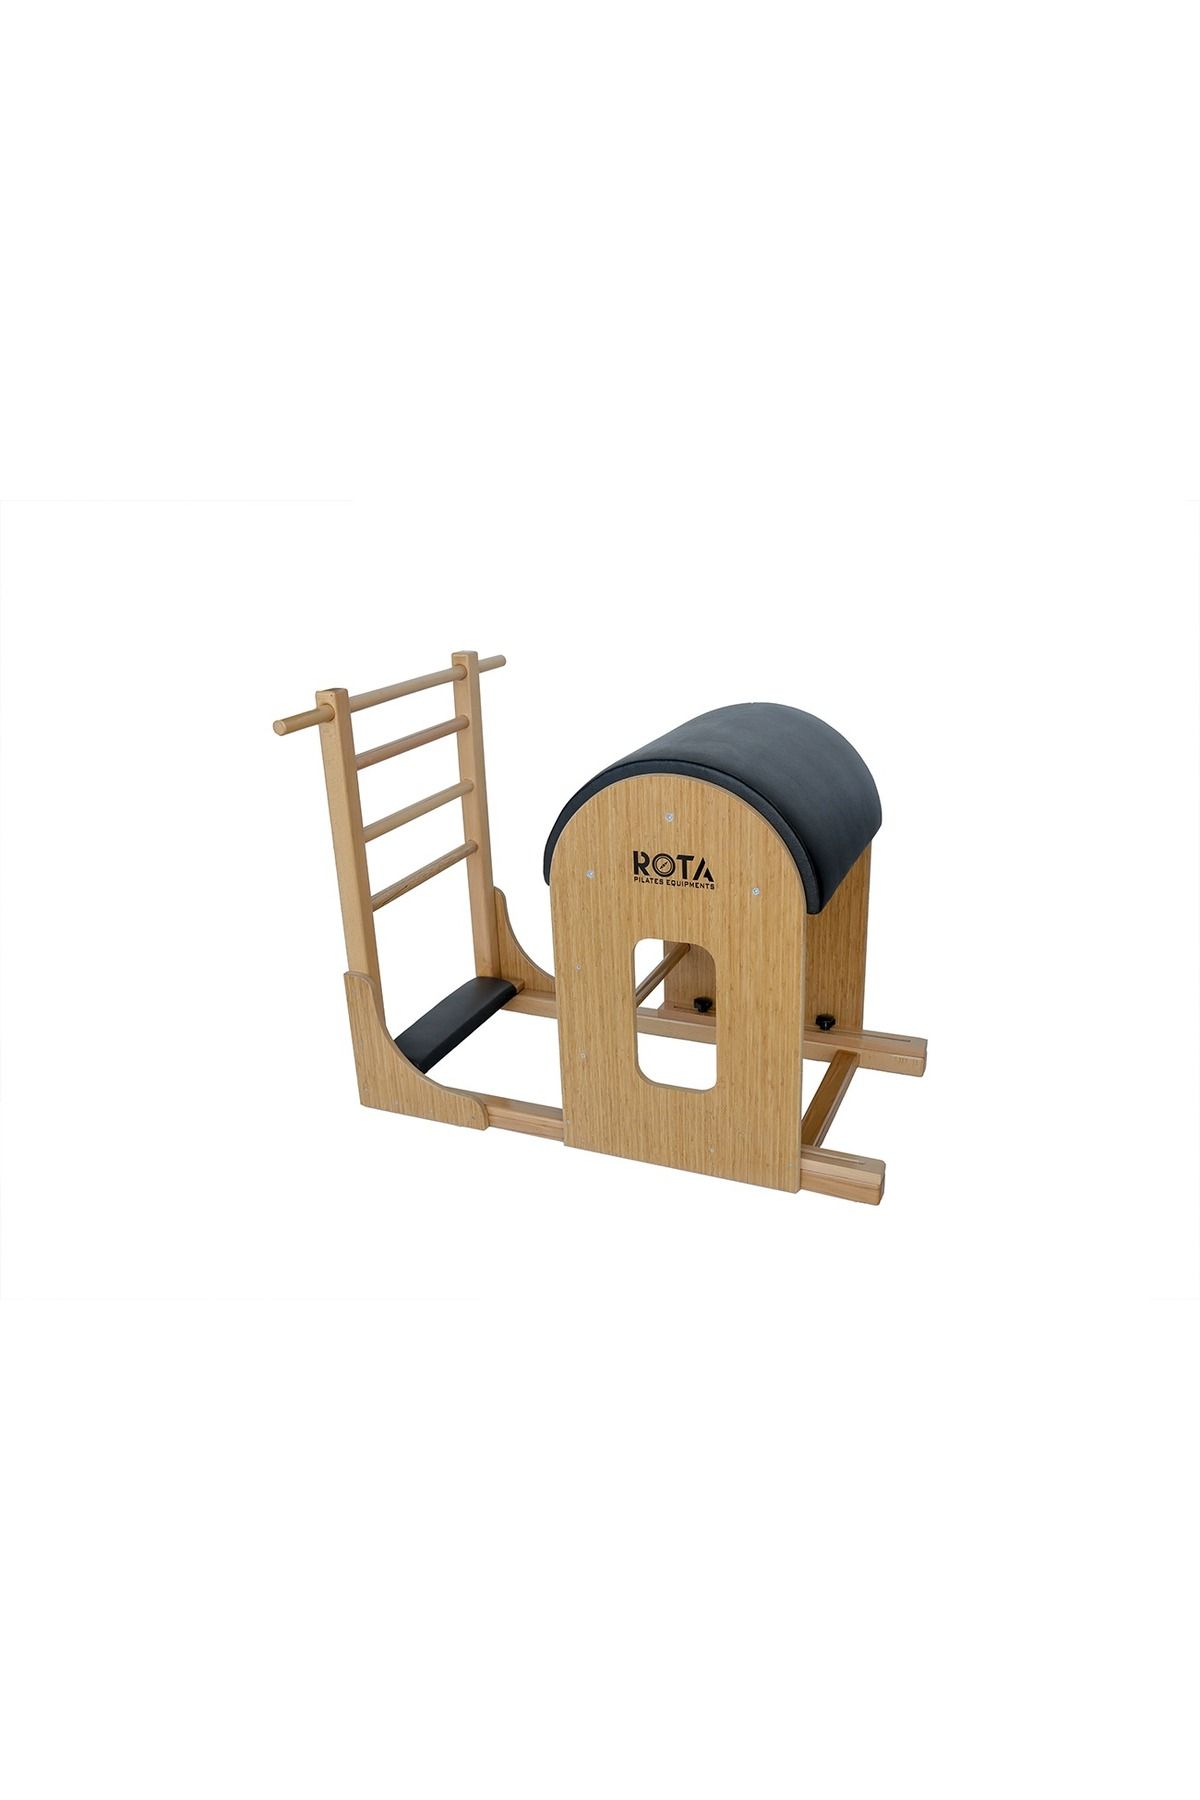 Rota reformer Ladder Barrel